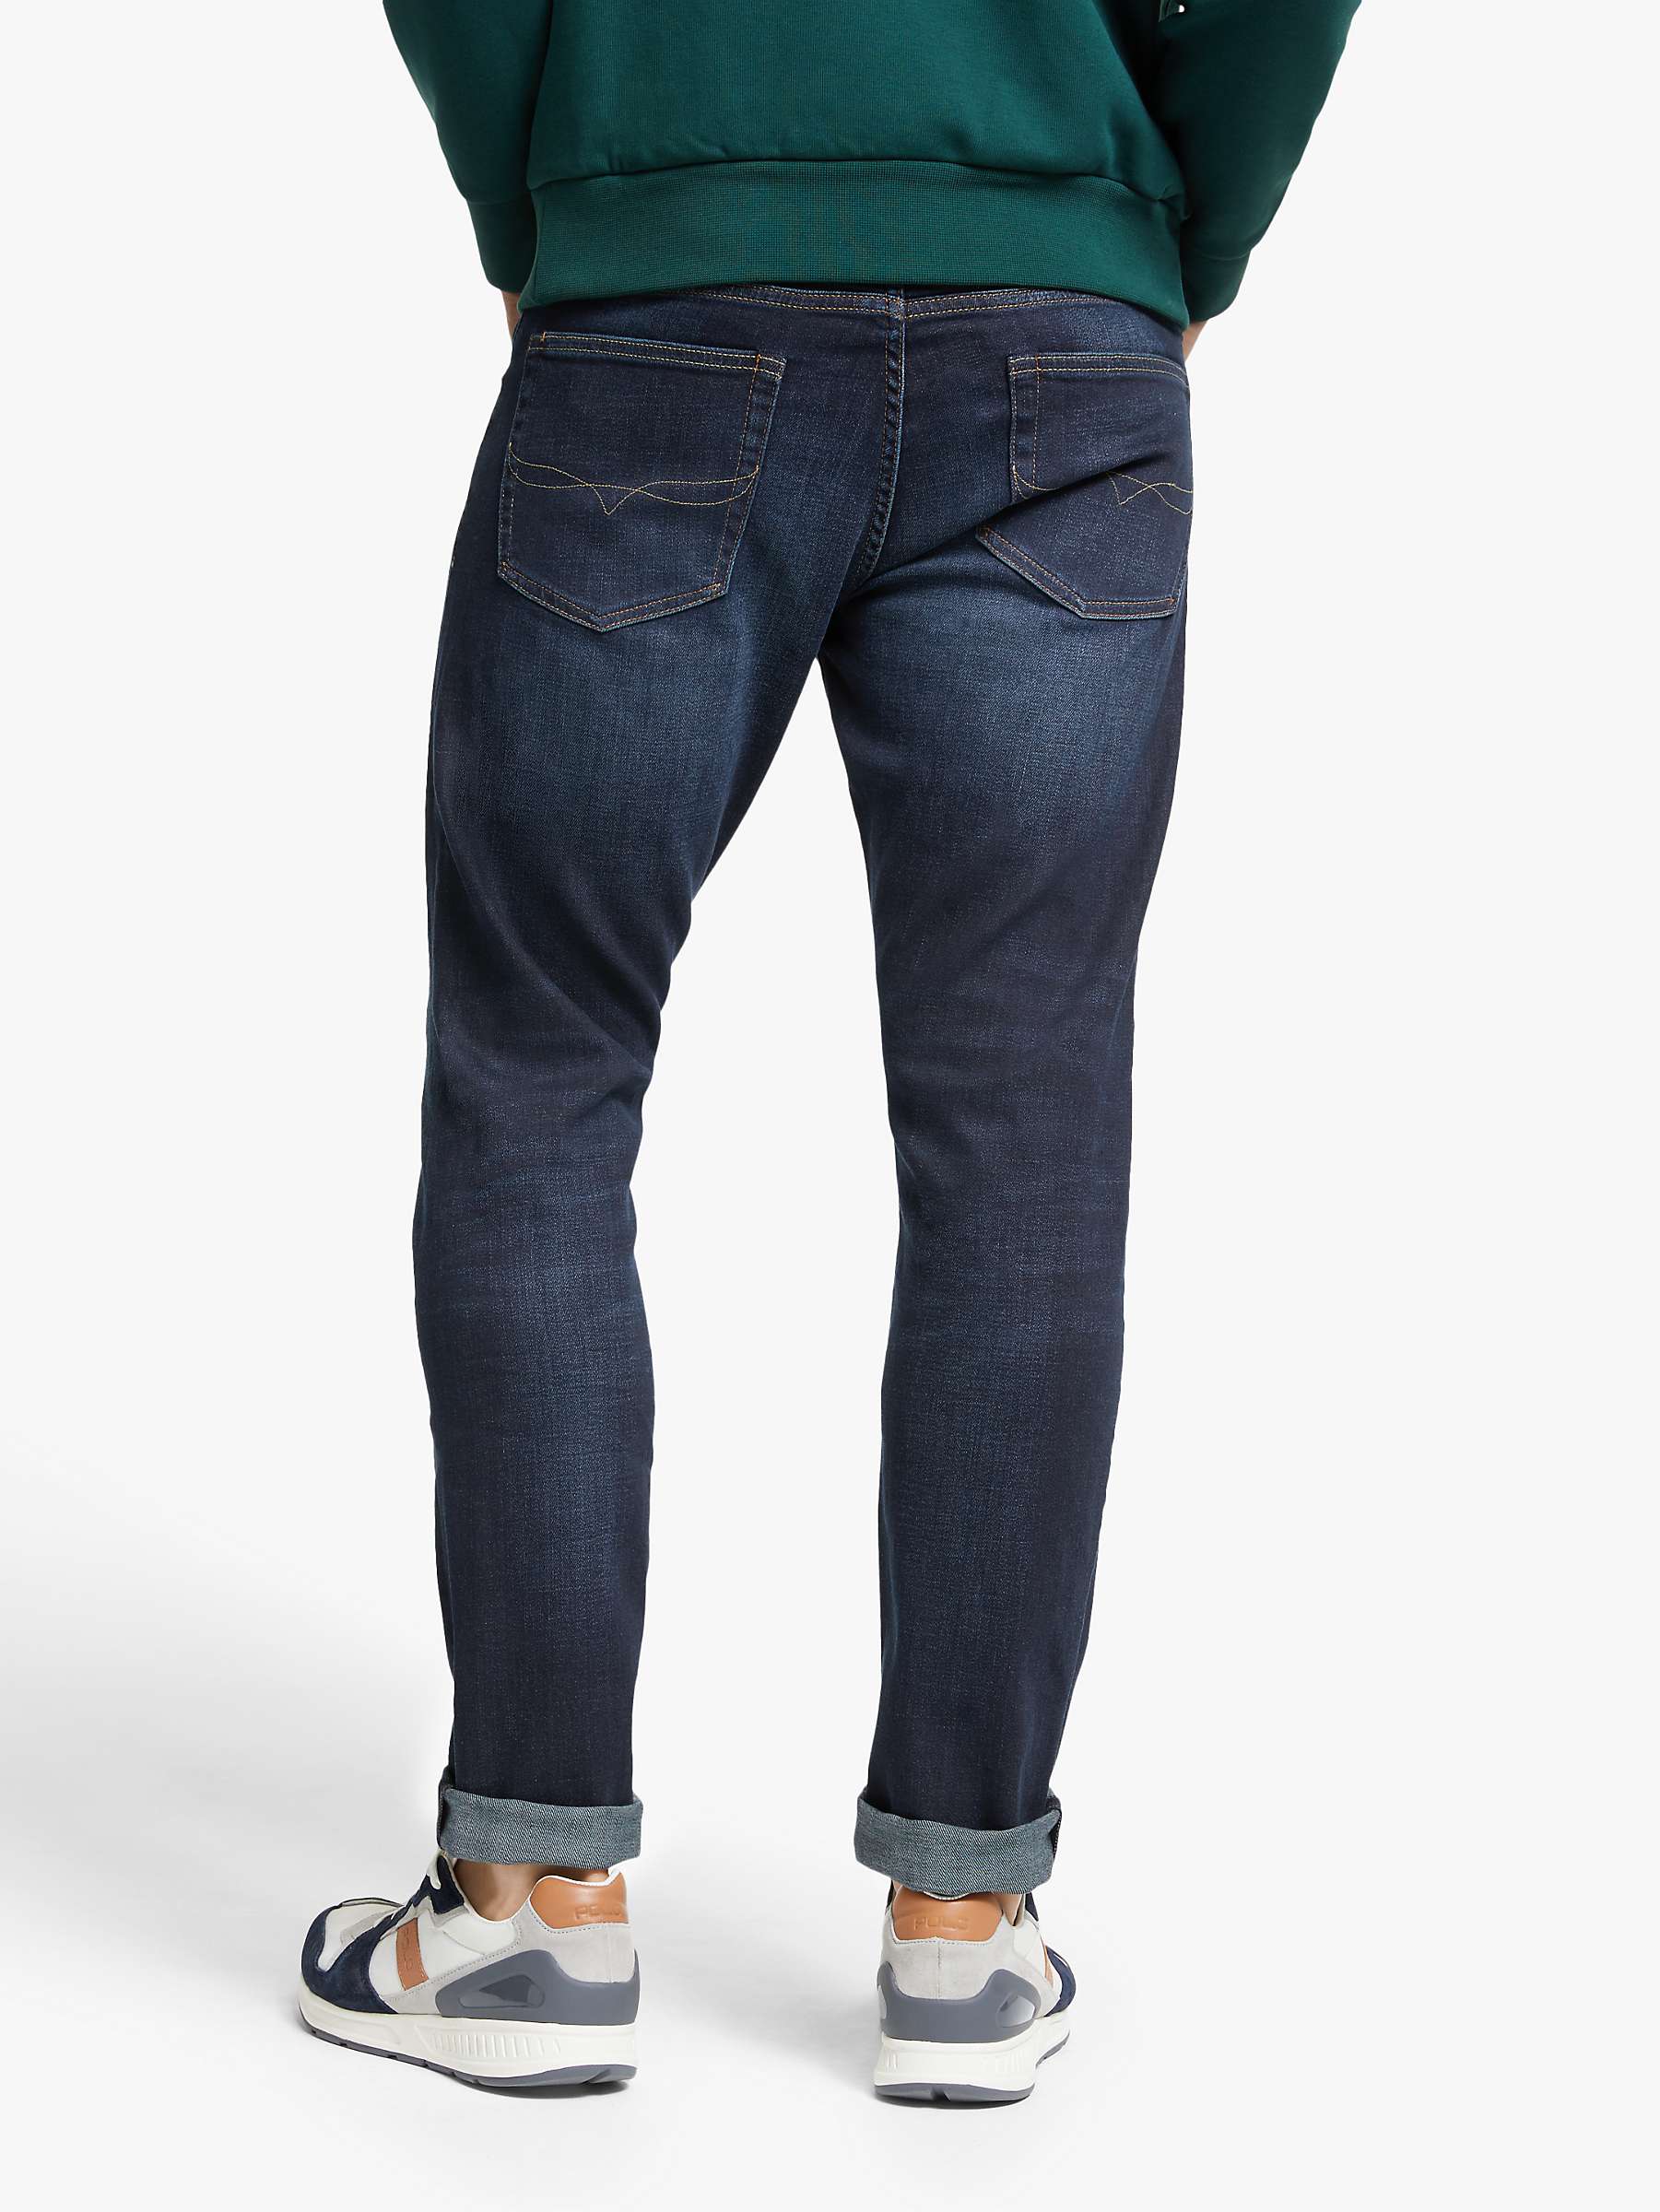 Buy Polo Ralph Lauren Sullivan Slim Stretch Jeans Online at johnlewis.com